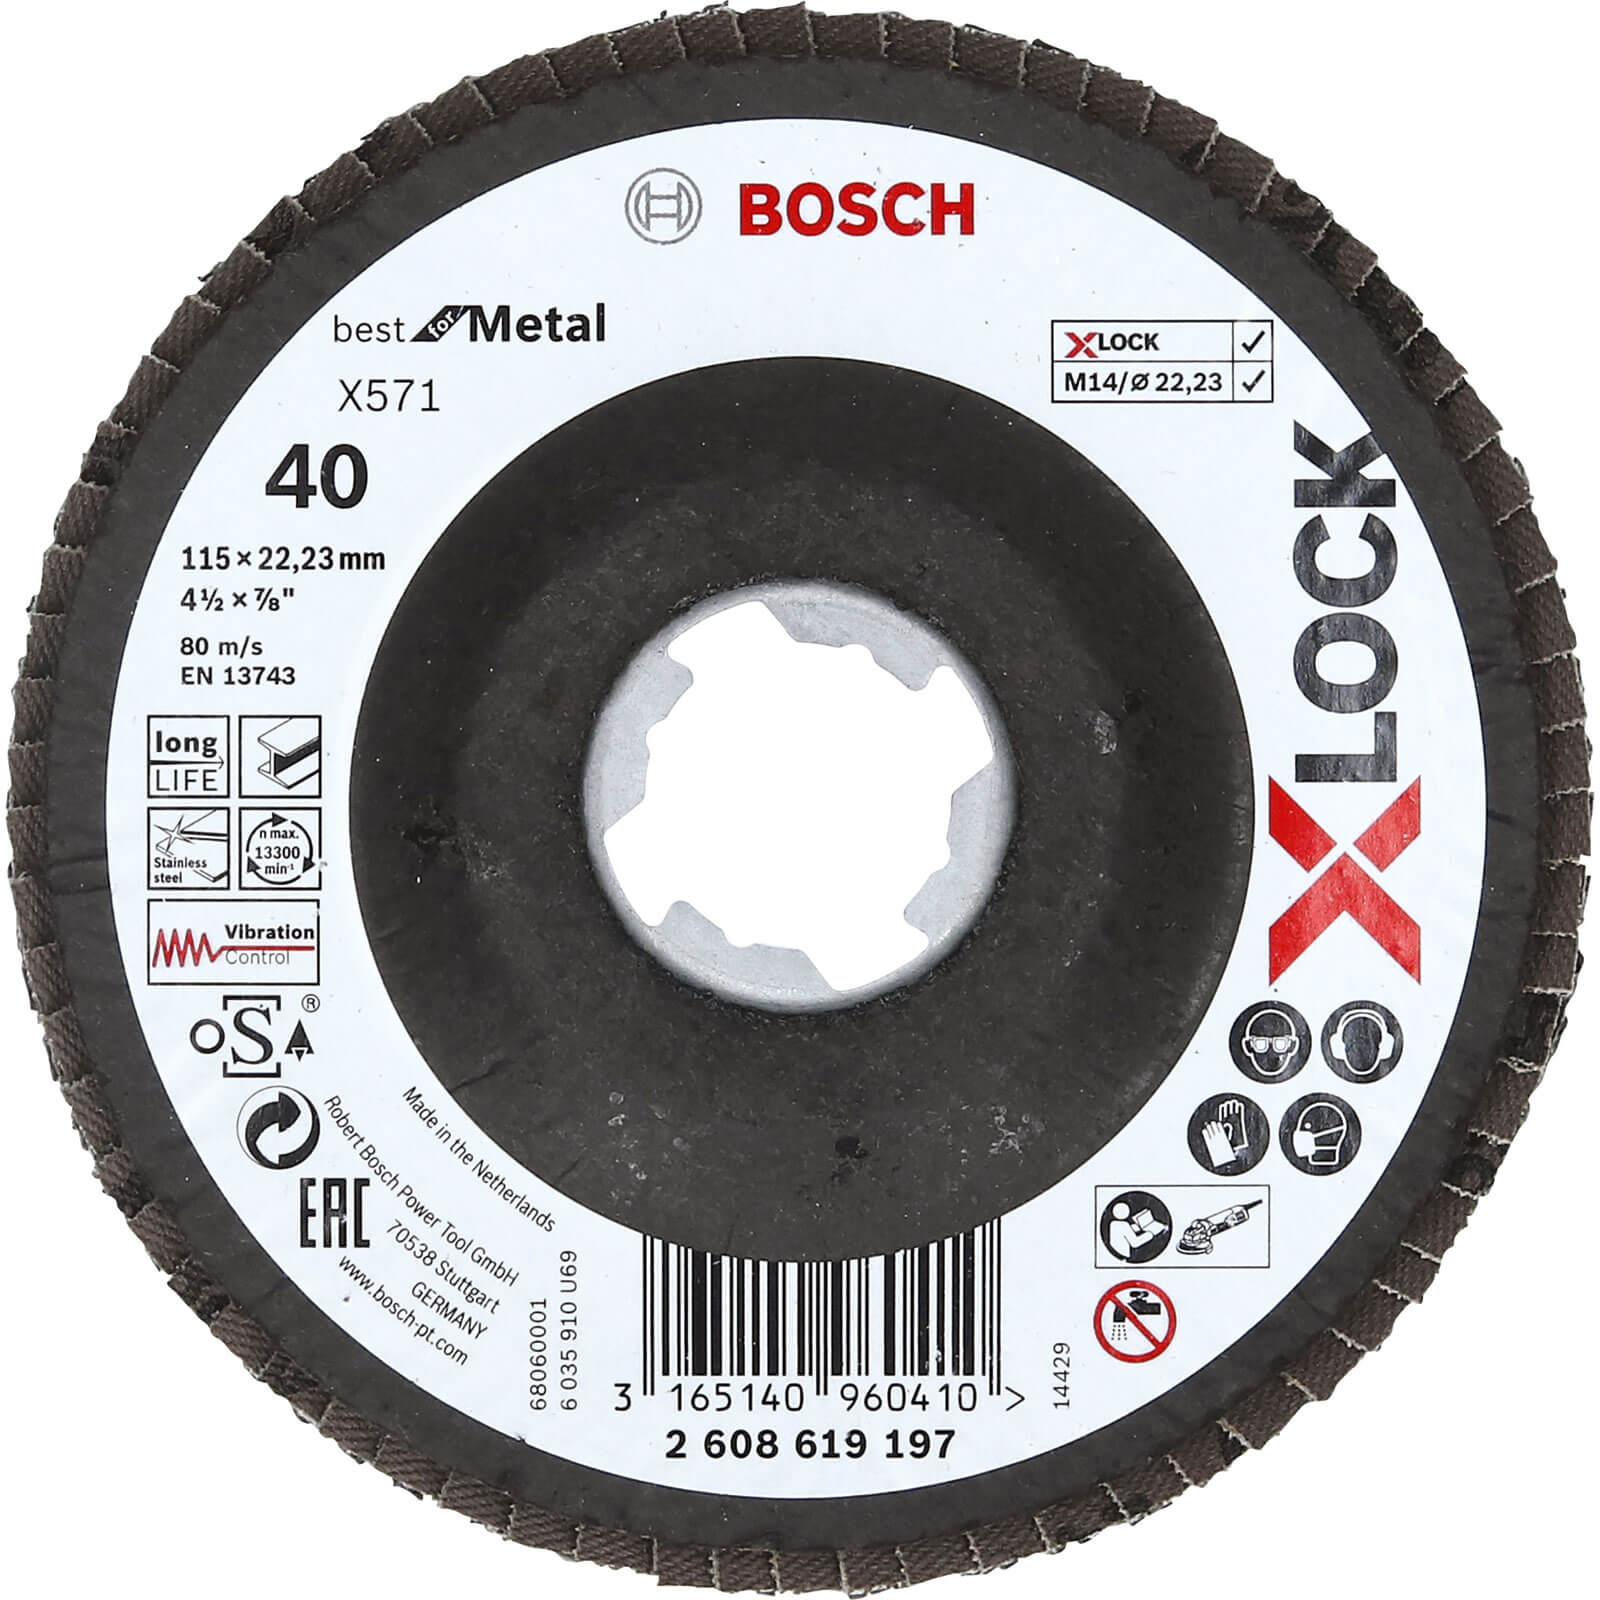 Photo of Bosch X Lock Zirconium Abrasive Flap Disc 115mm 40g Pack Of 1